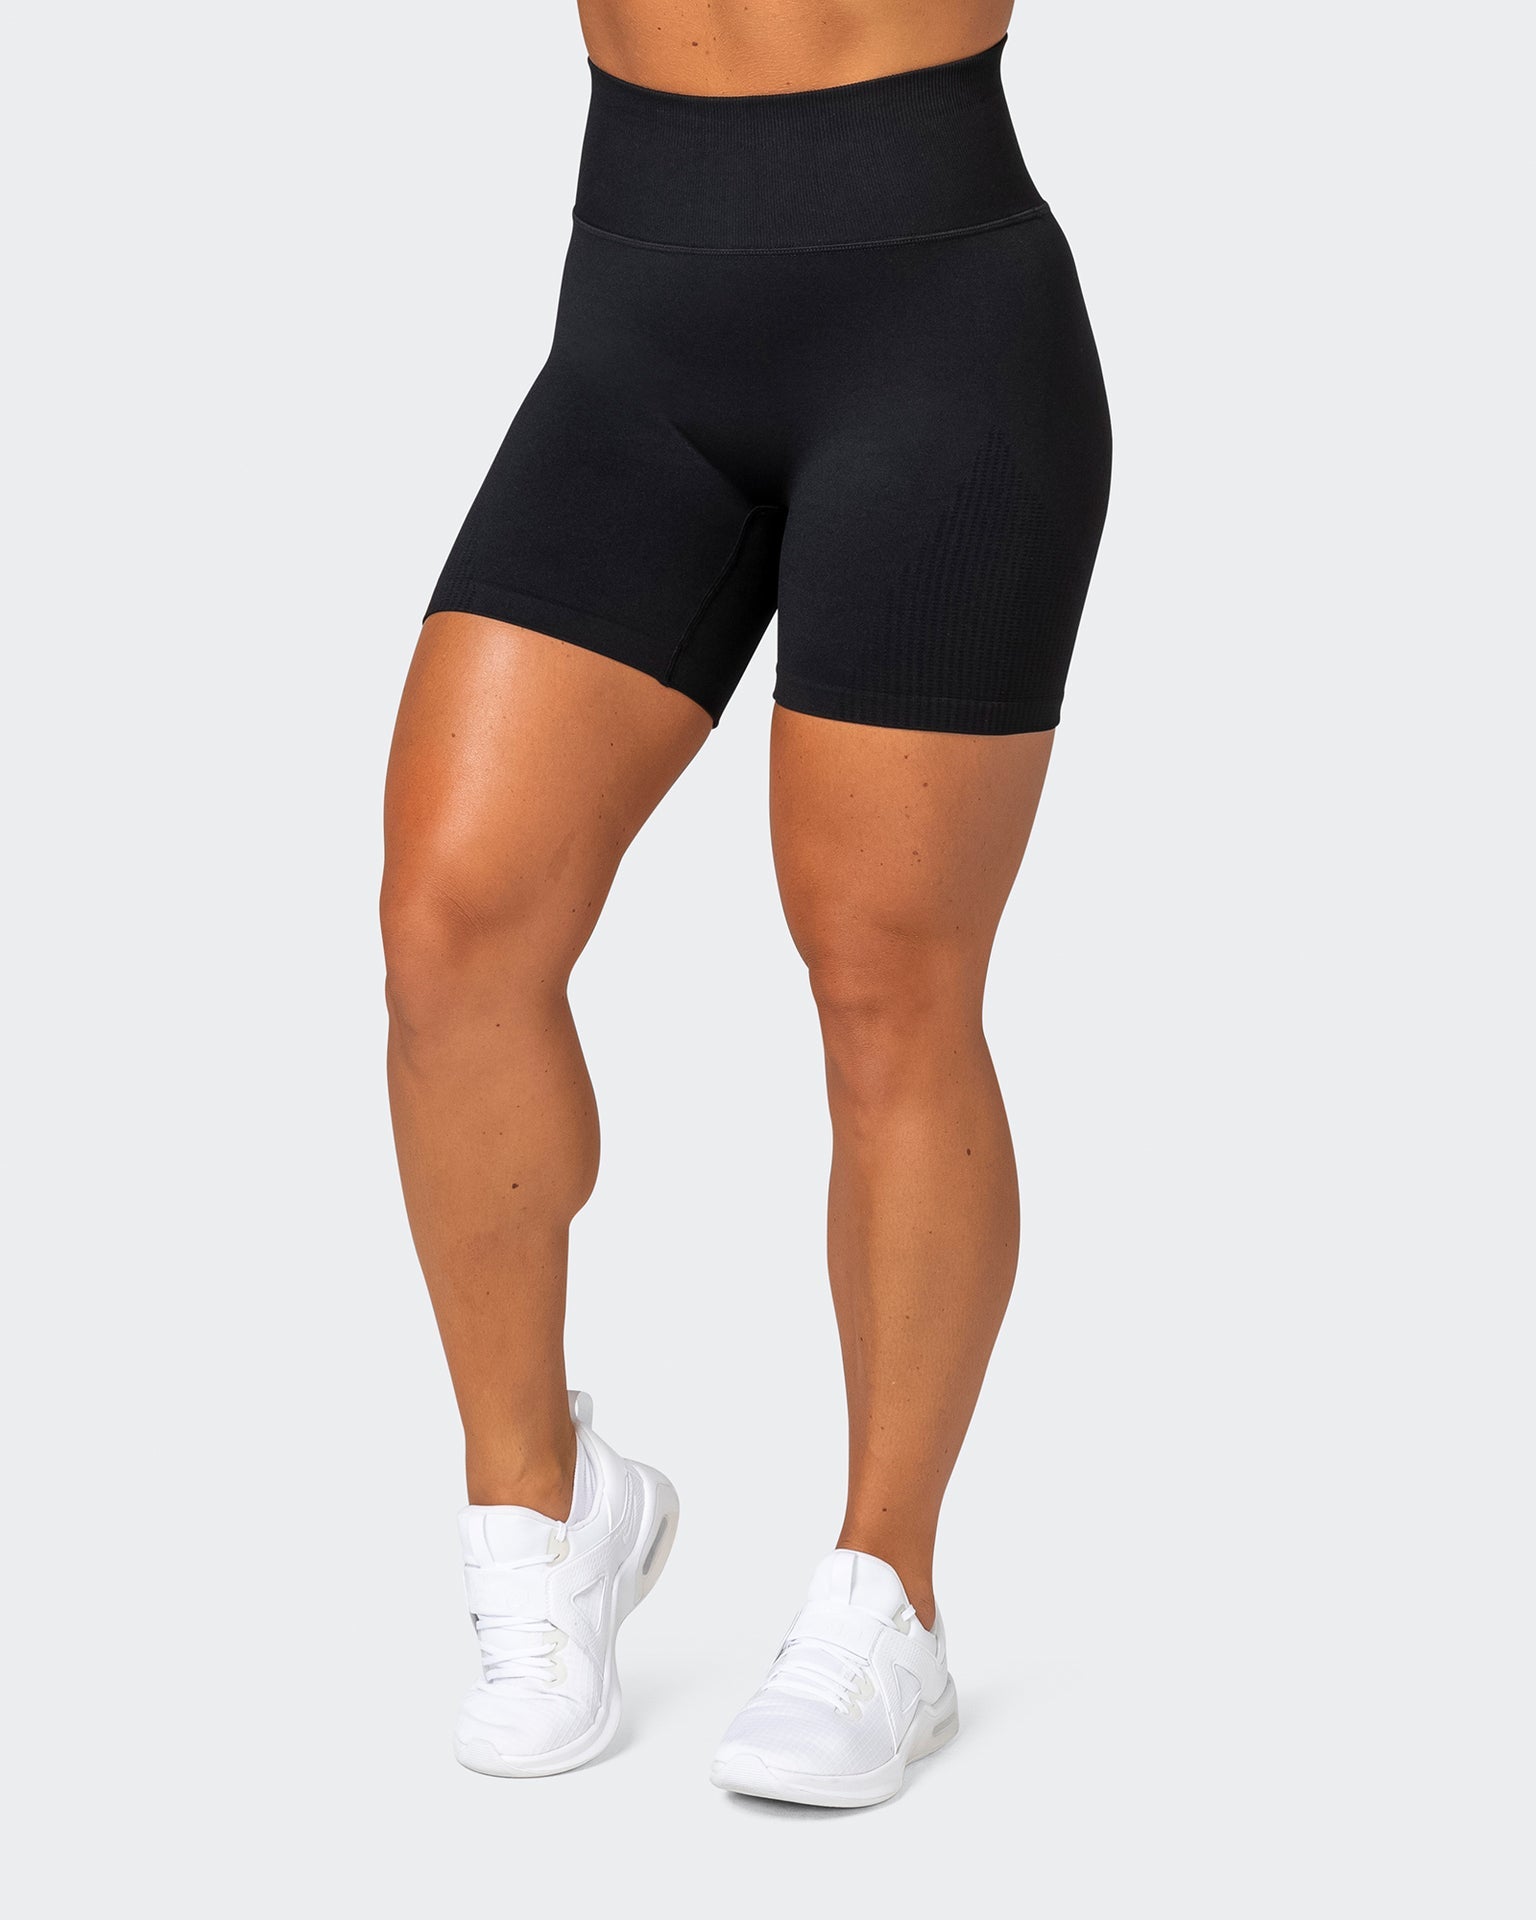 musclenation Bike Shorts Seamless Bike Shorts - Black